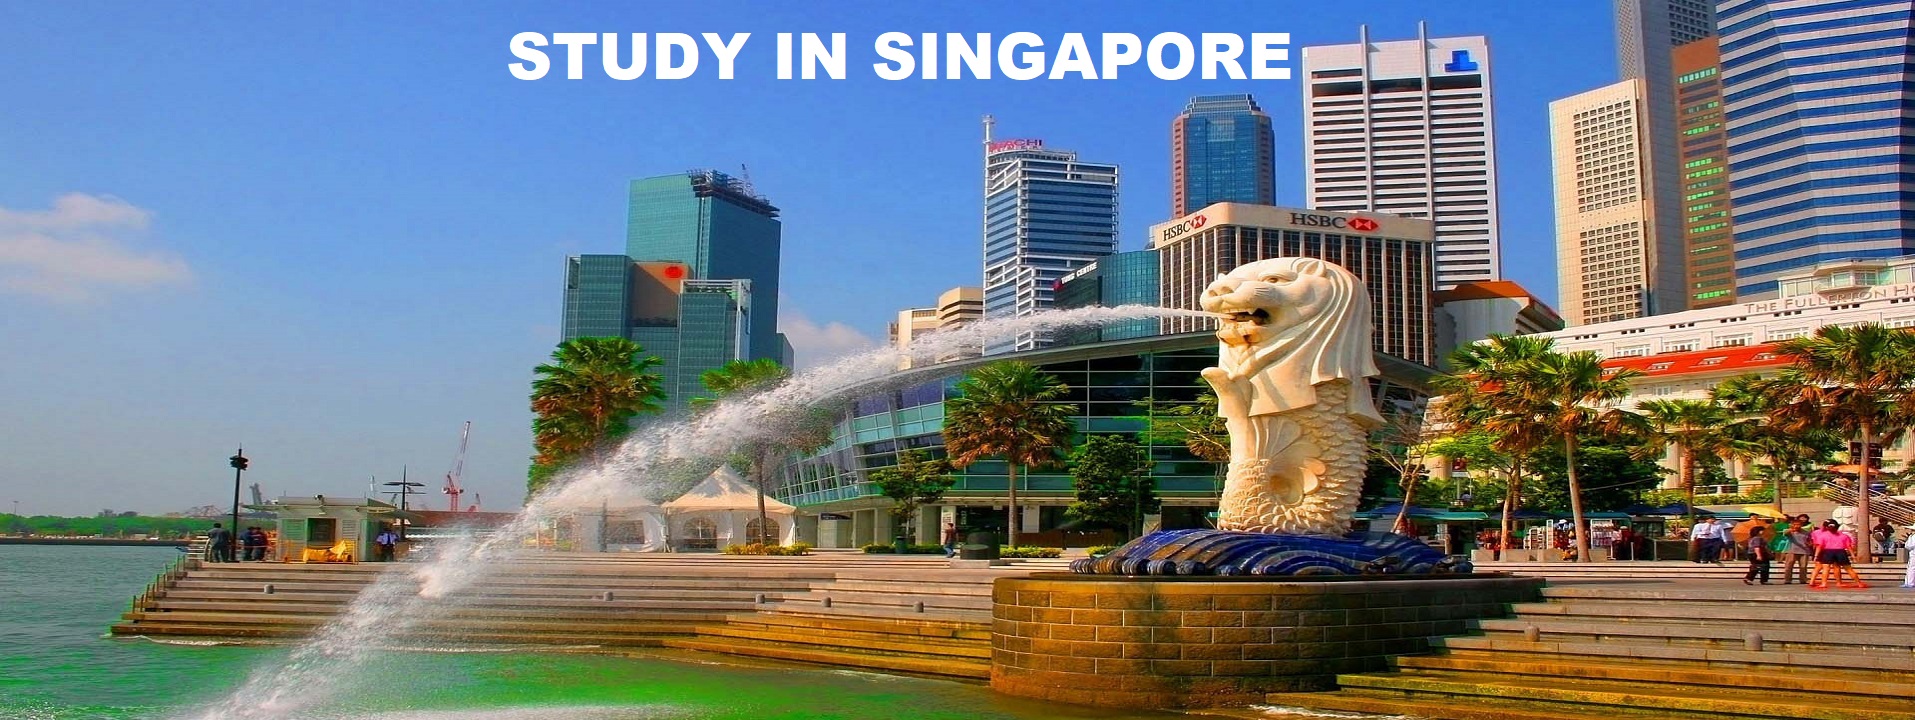 Education Consultants Singapore | study abroad opportunities in Singapore | study abroad Singapore | studying abroad in Singapore tips | Student Guide to Singapore